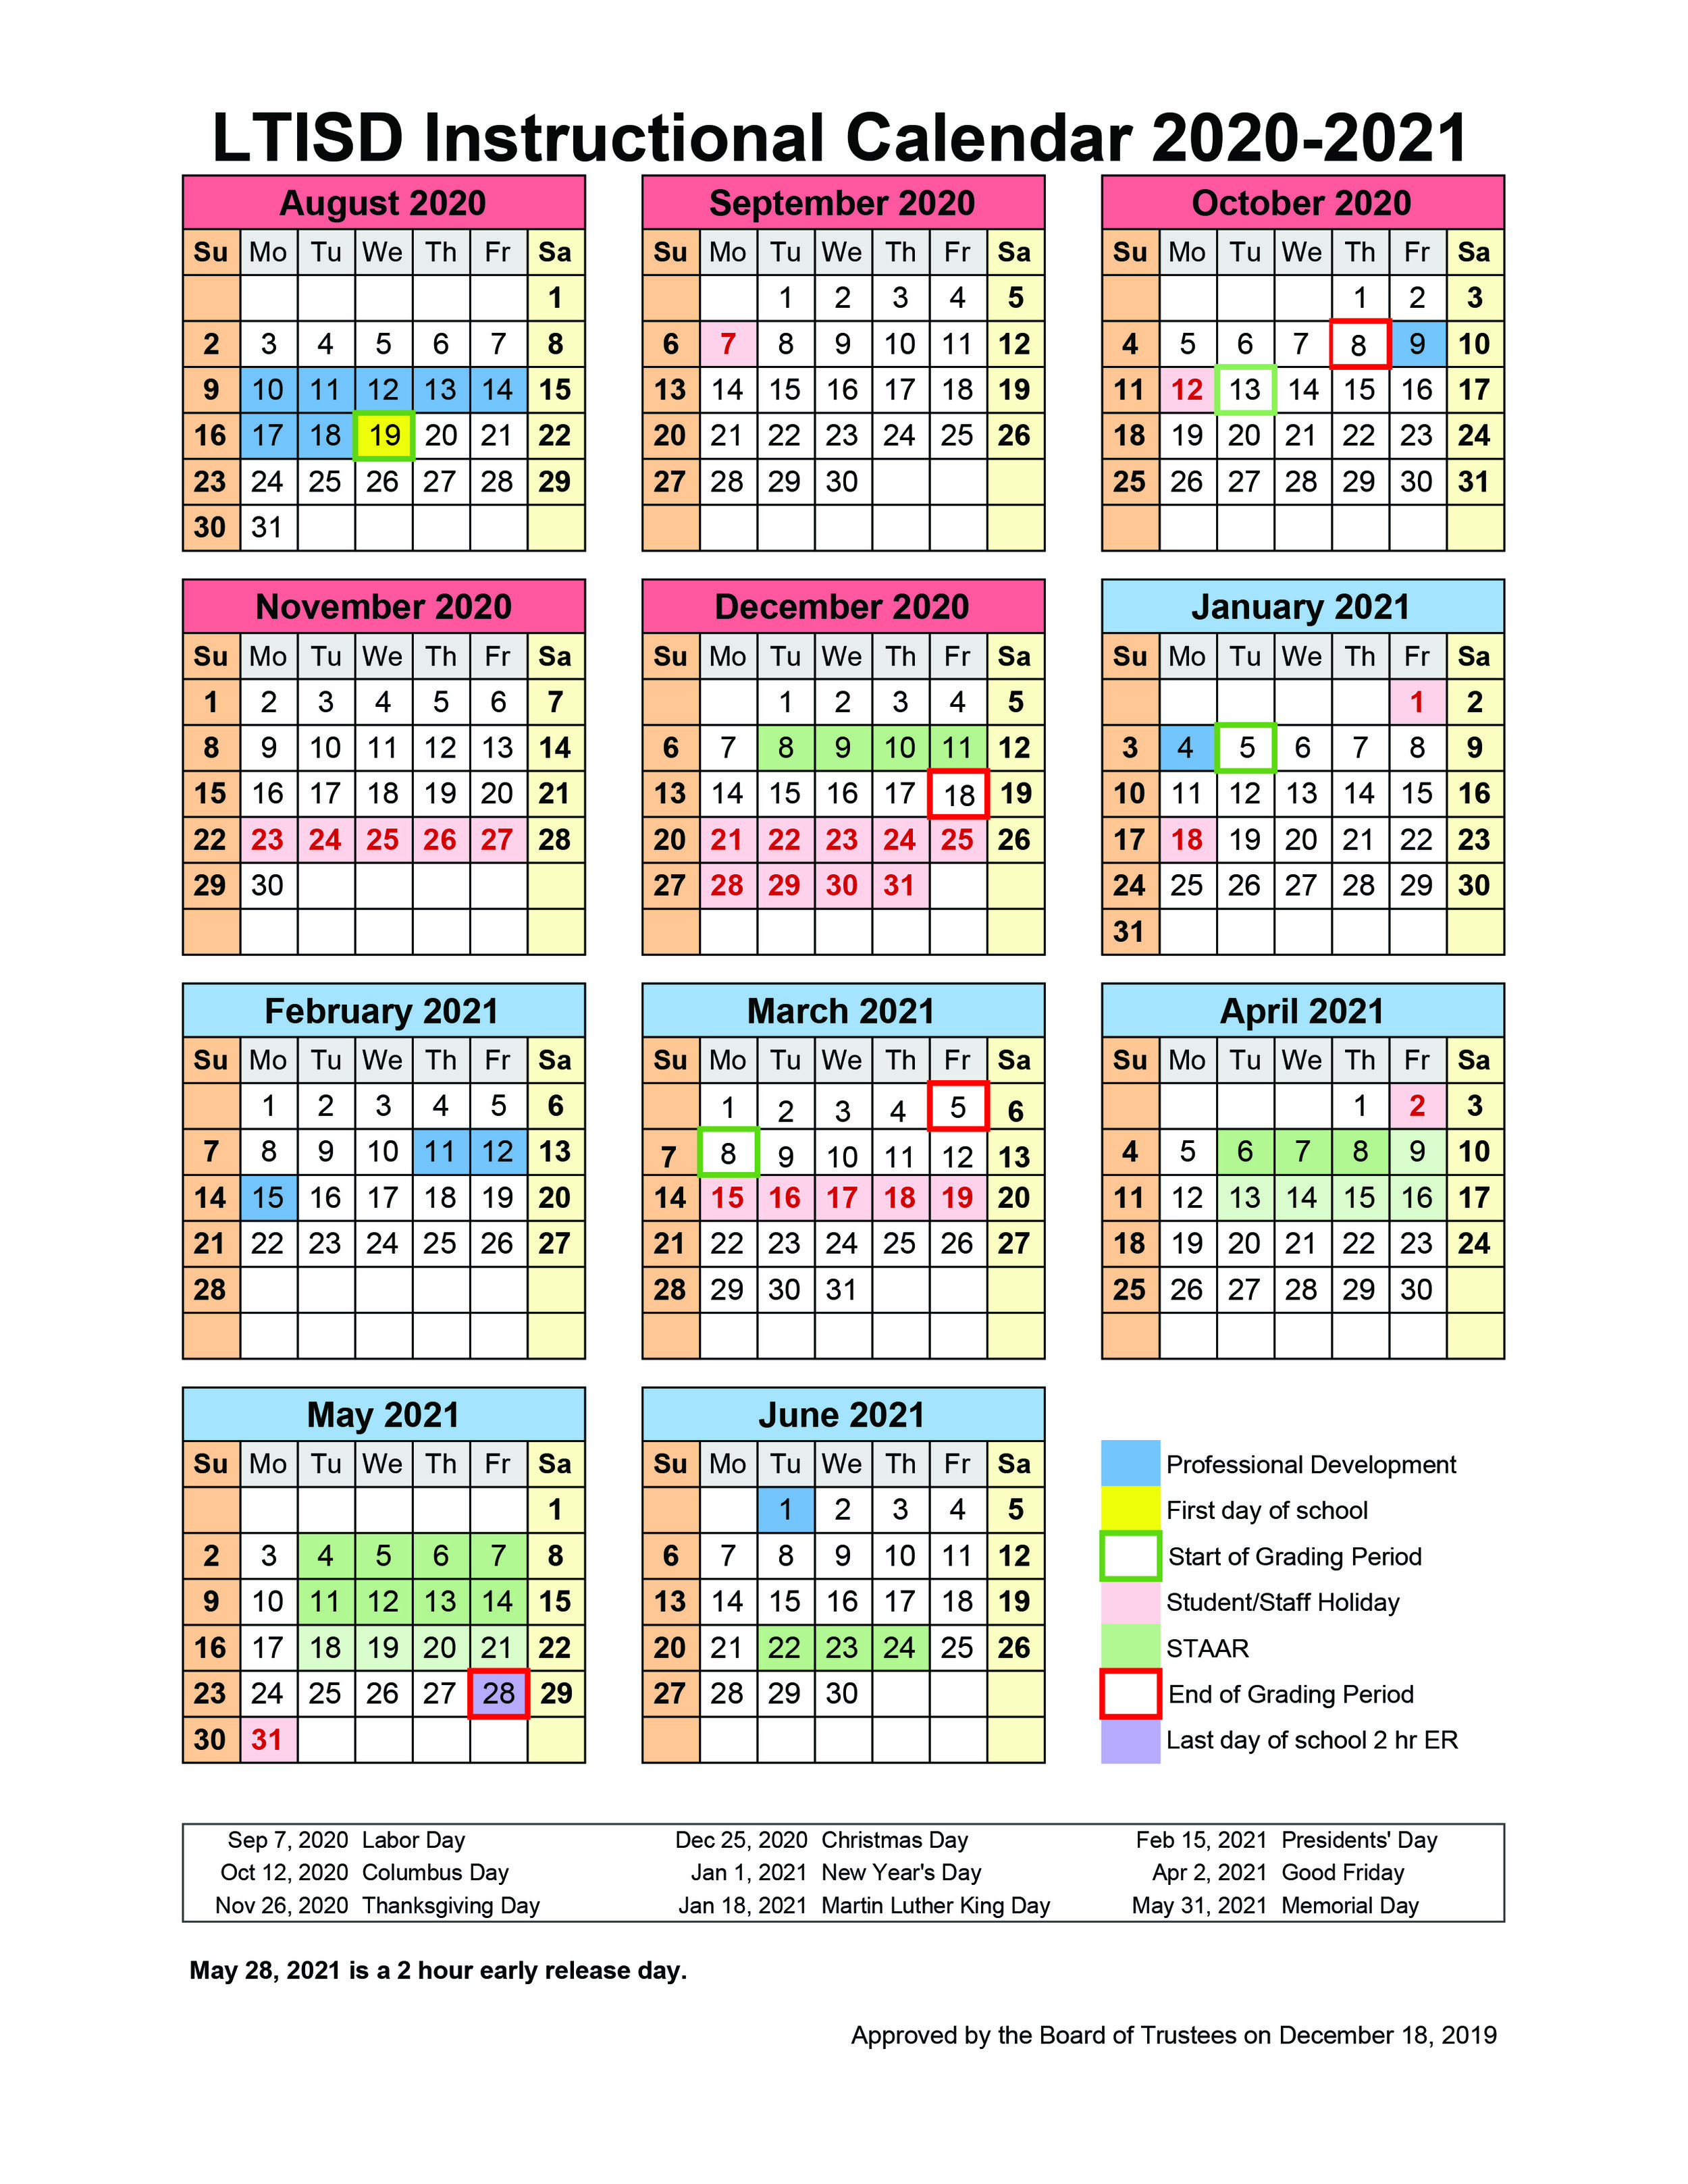 School Board Approves 2020 2021 Instructional Calendar Currents